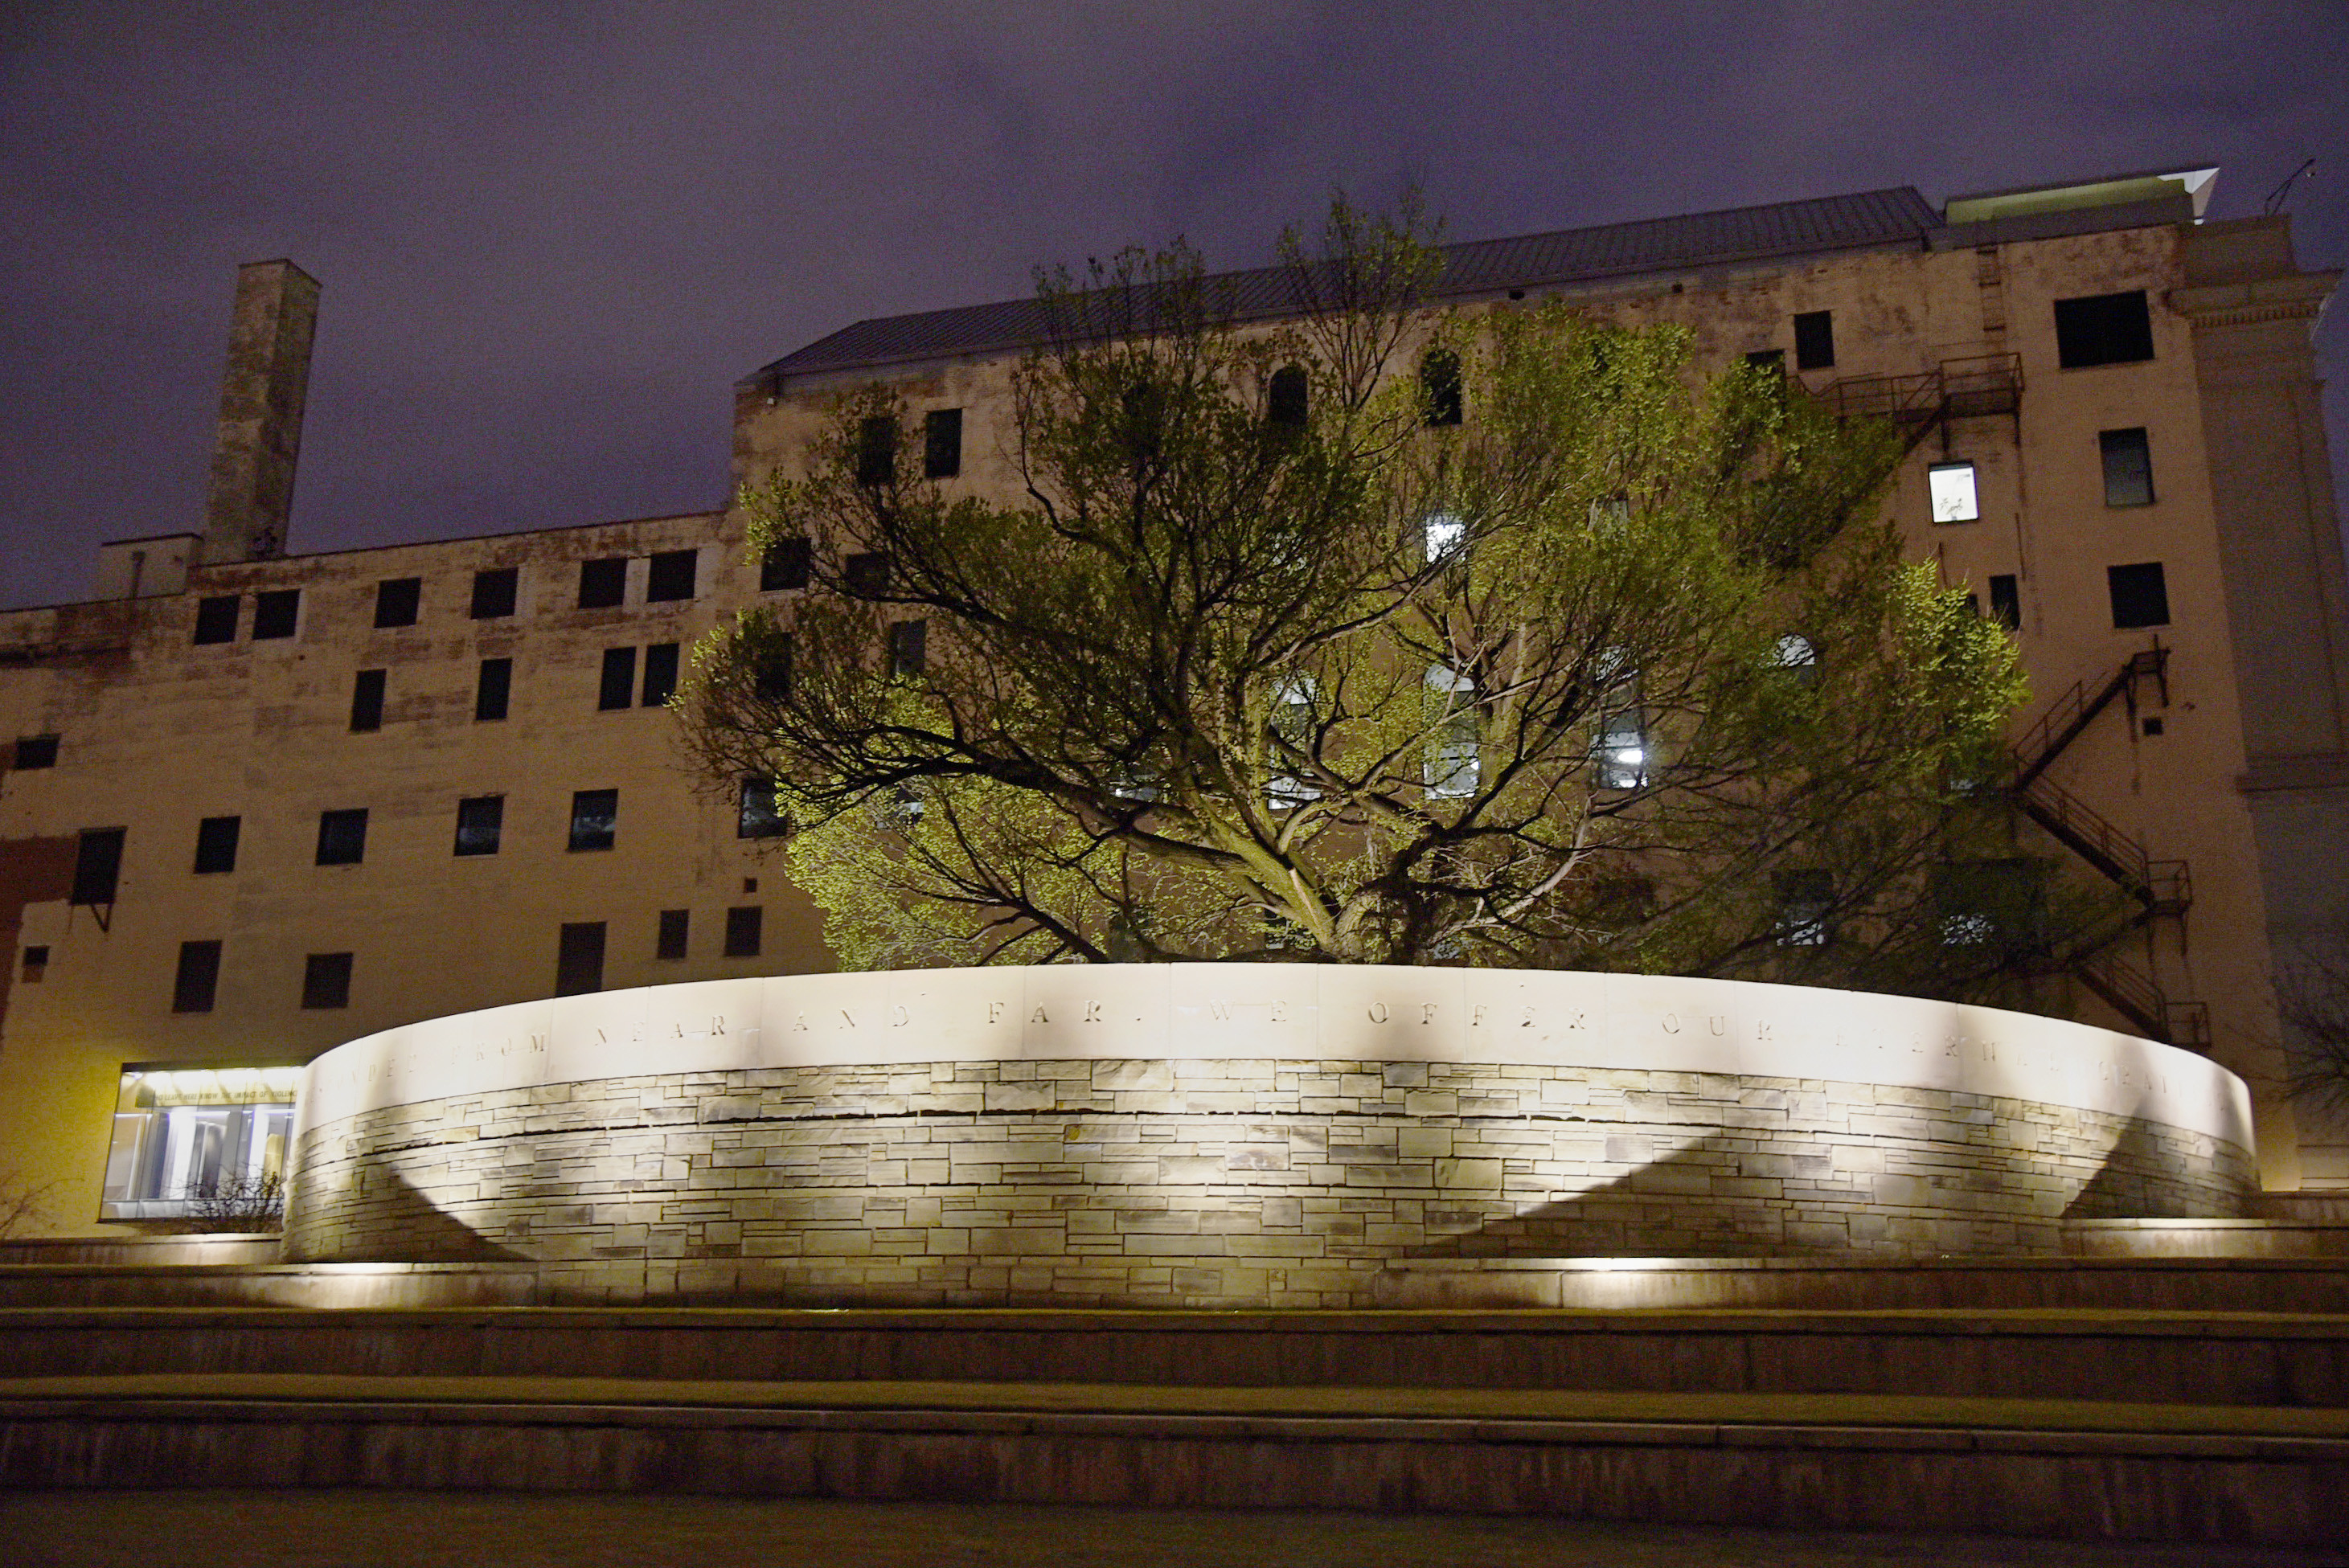 The Survivor Tree – Then – Oklahoma City National Memorial & Museum